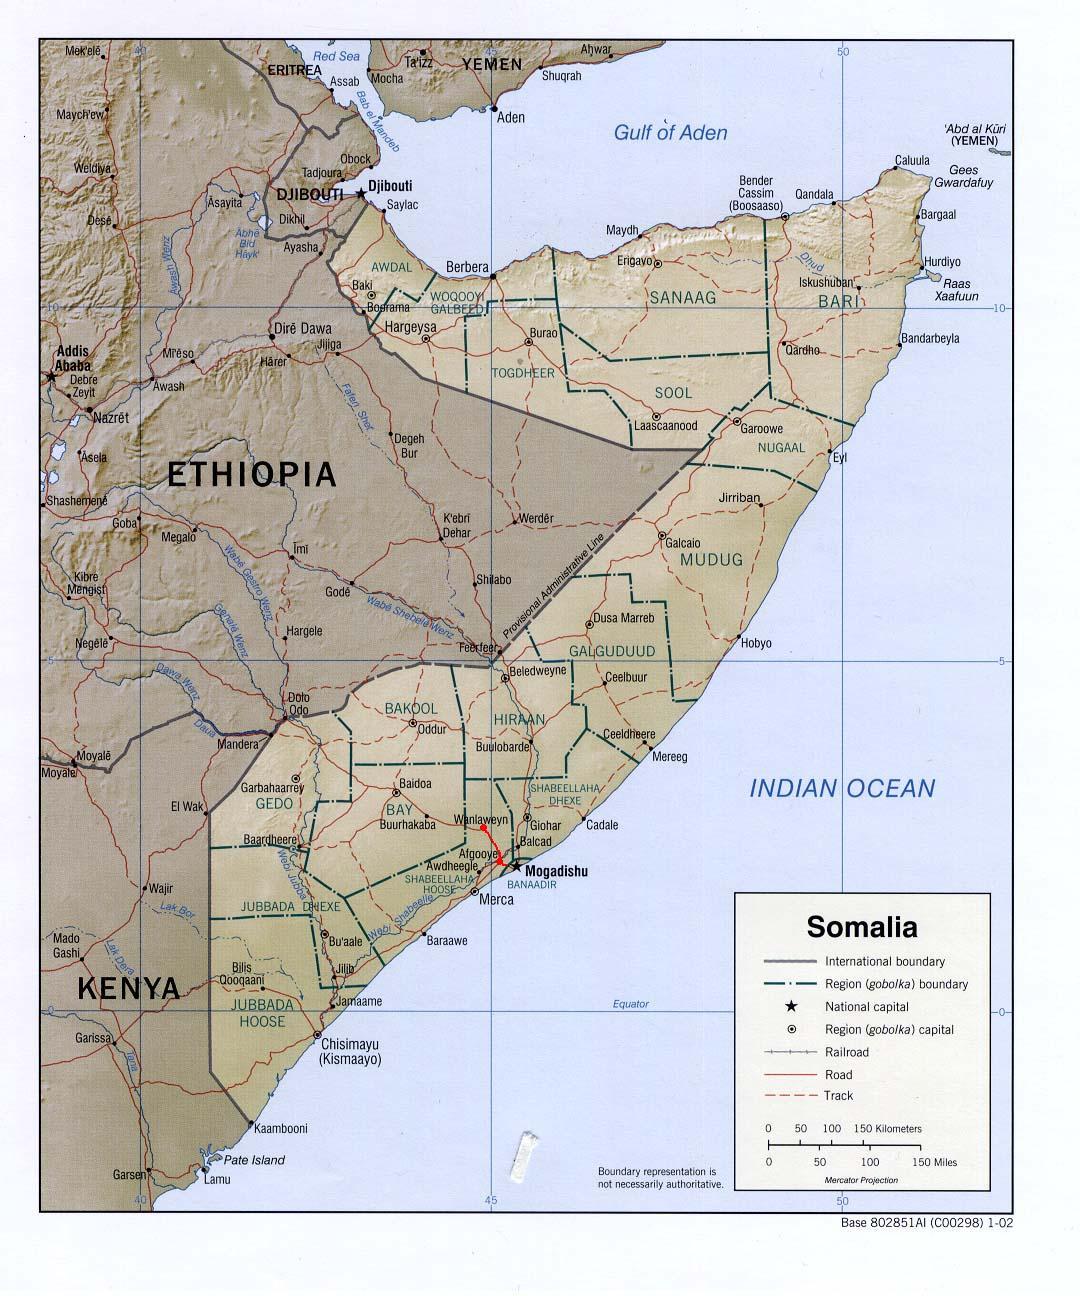 (map 1: Somalië met